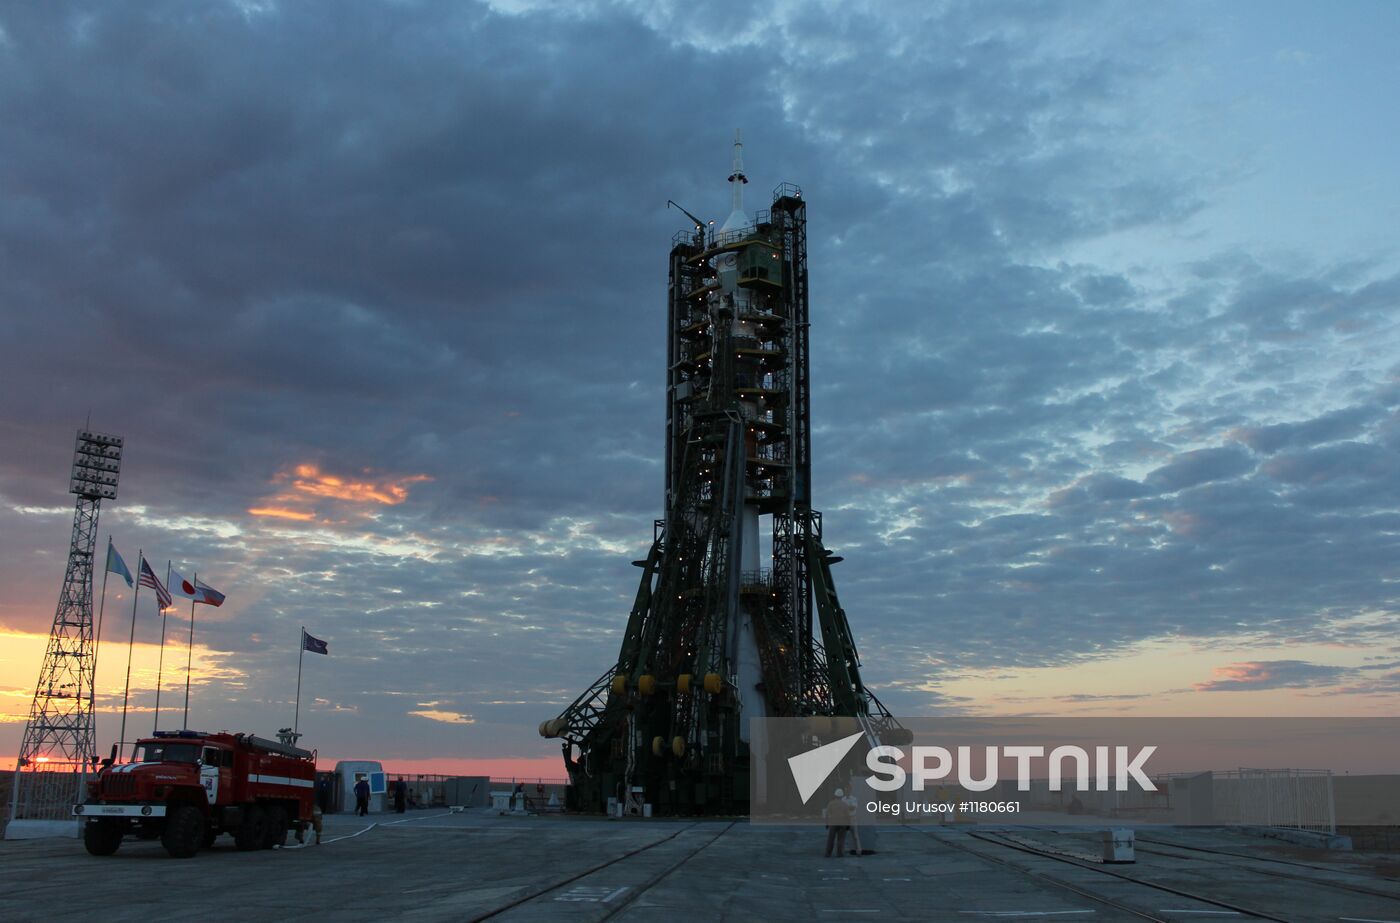 Launch of Soyuz TMA-05M manned spacecraft